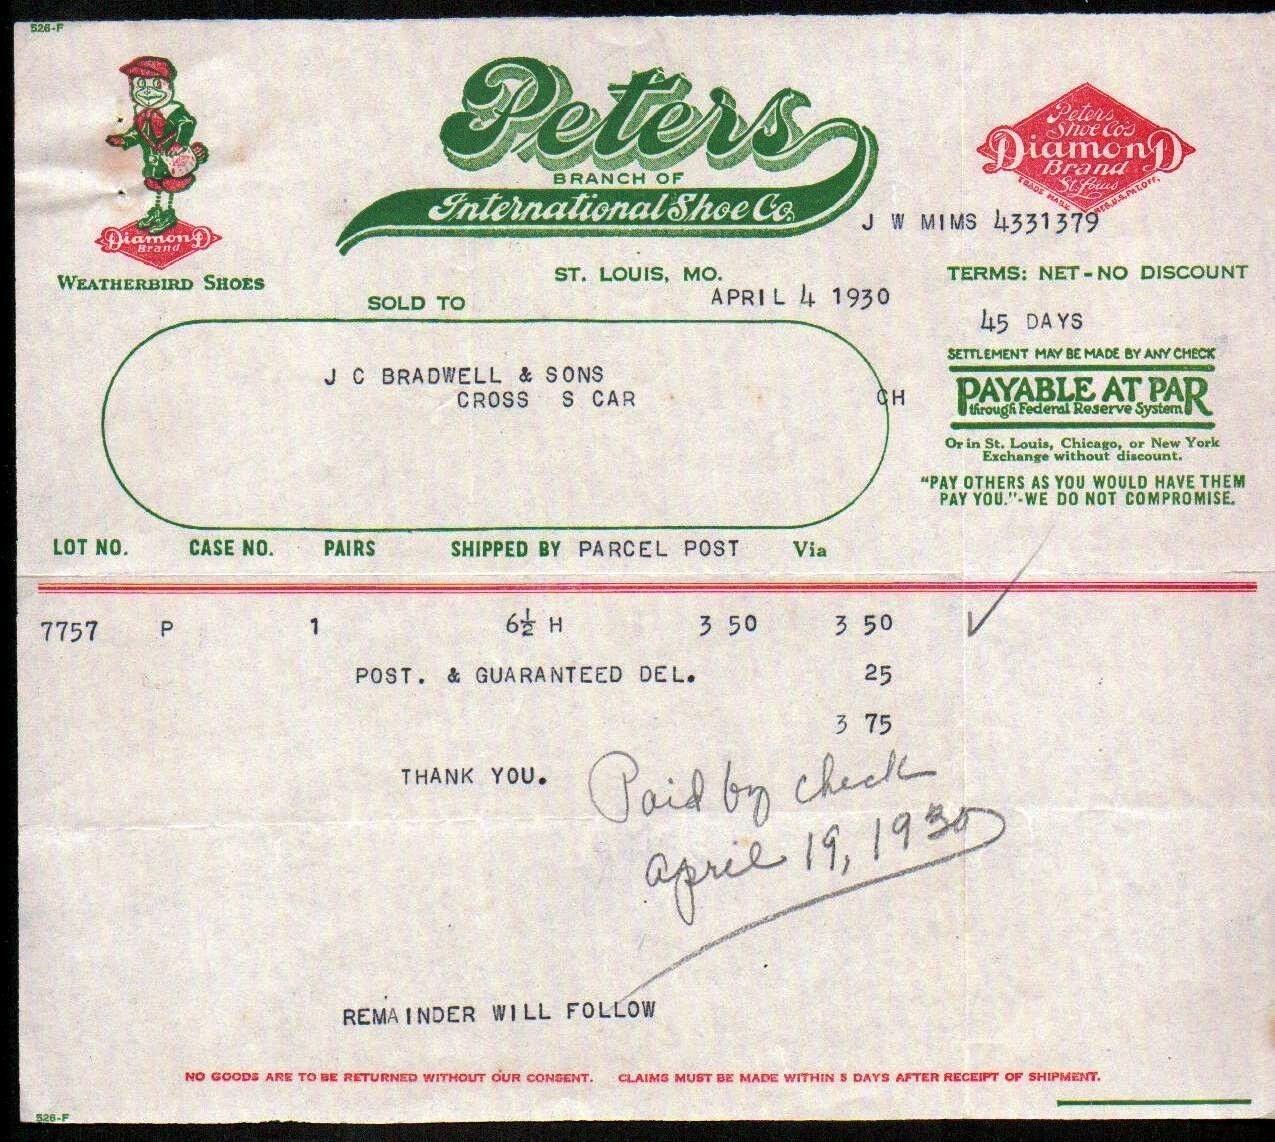 St Louis MO 1922 Peters International Shoe Co - Diamond Brand - Letter Head Bill